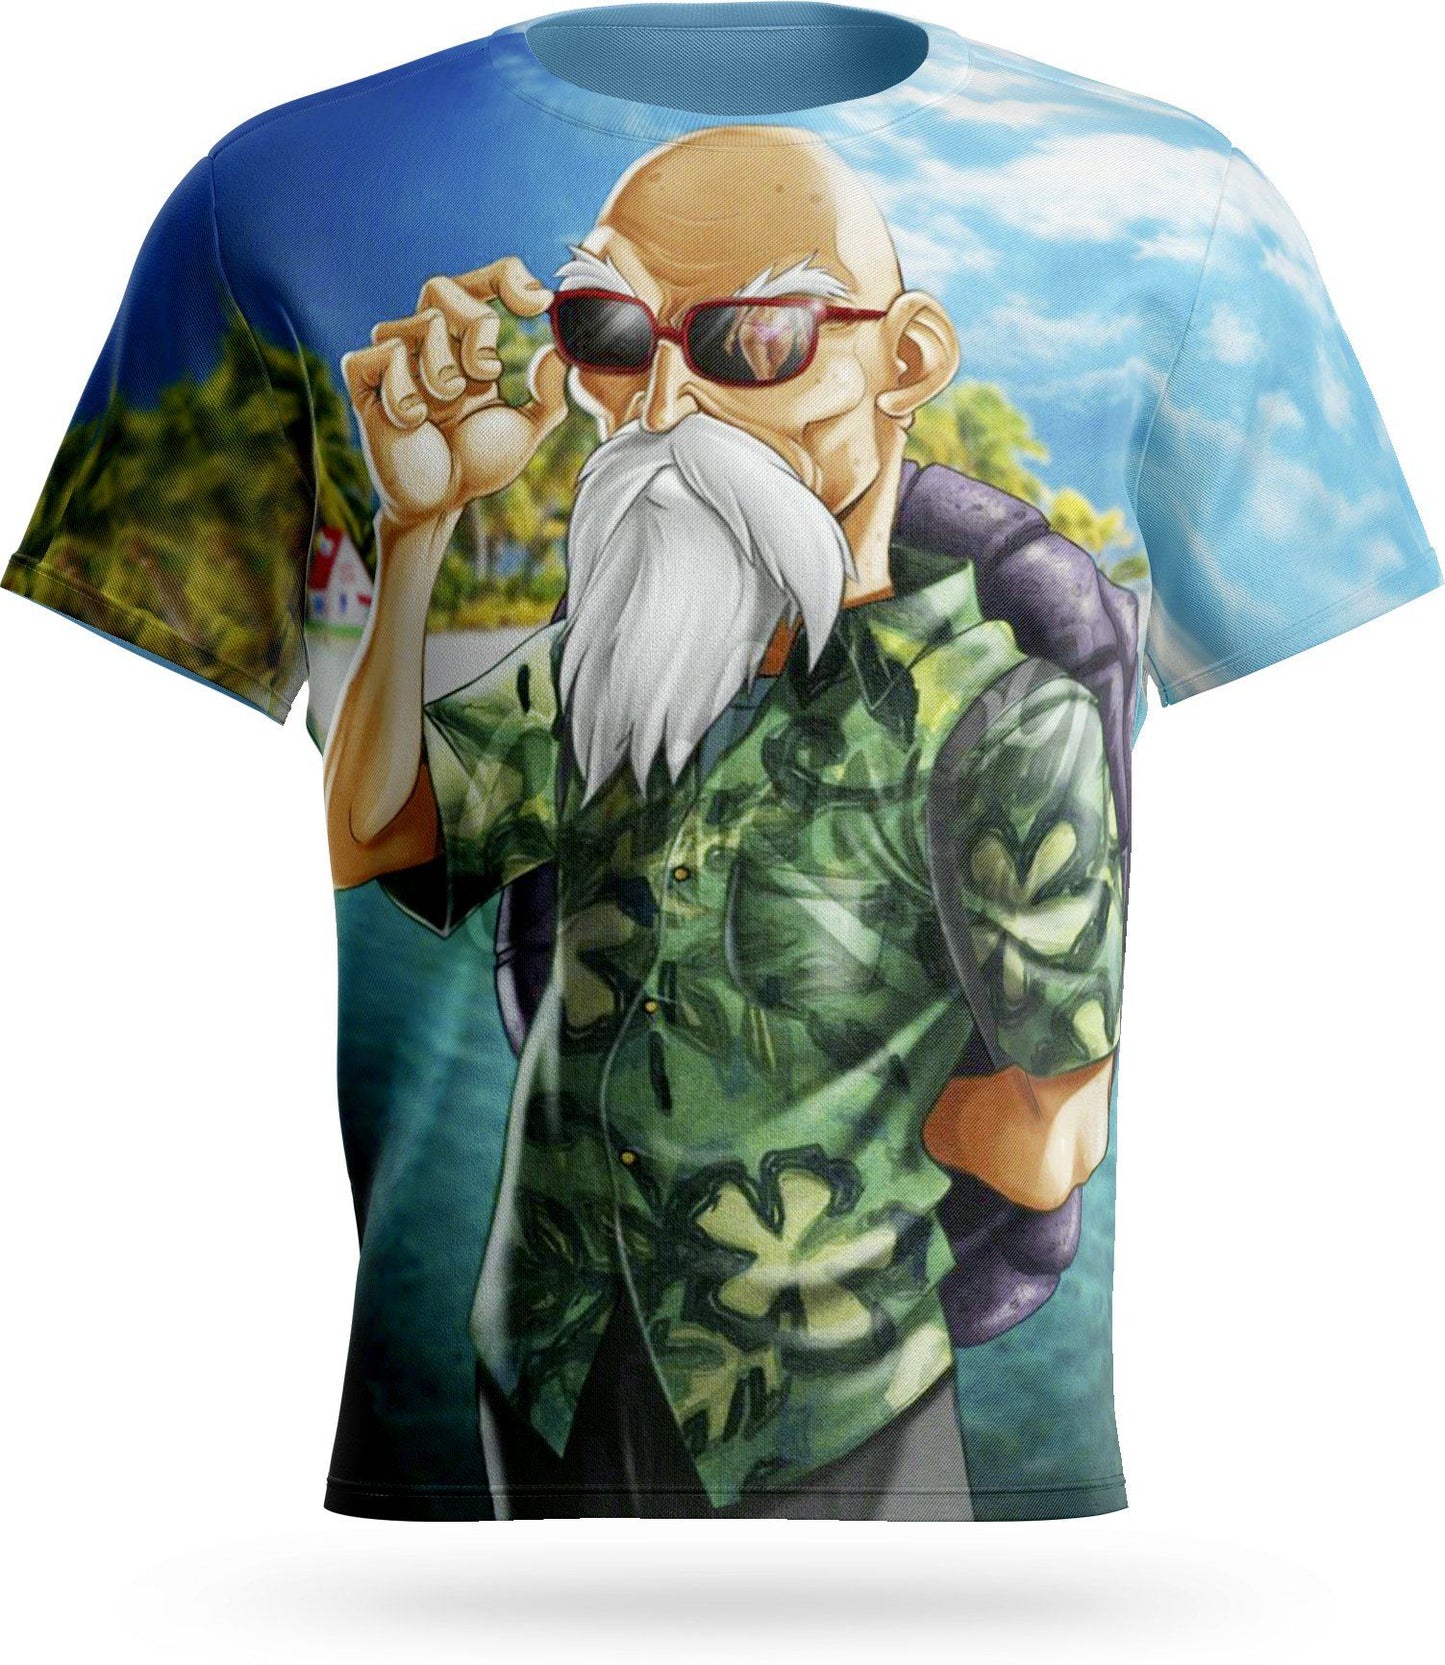 Dragon Ball Awesome Turtle T-Shirt